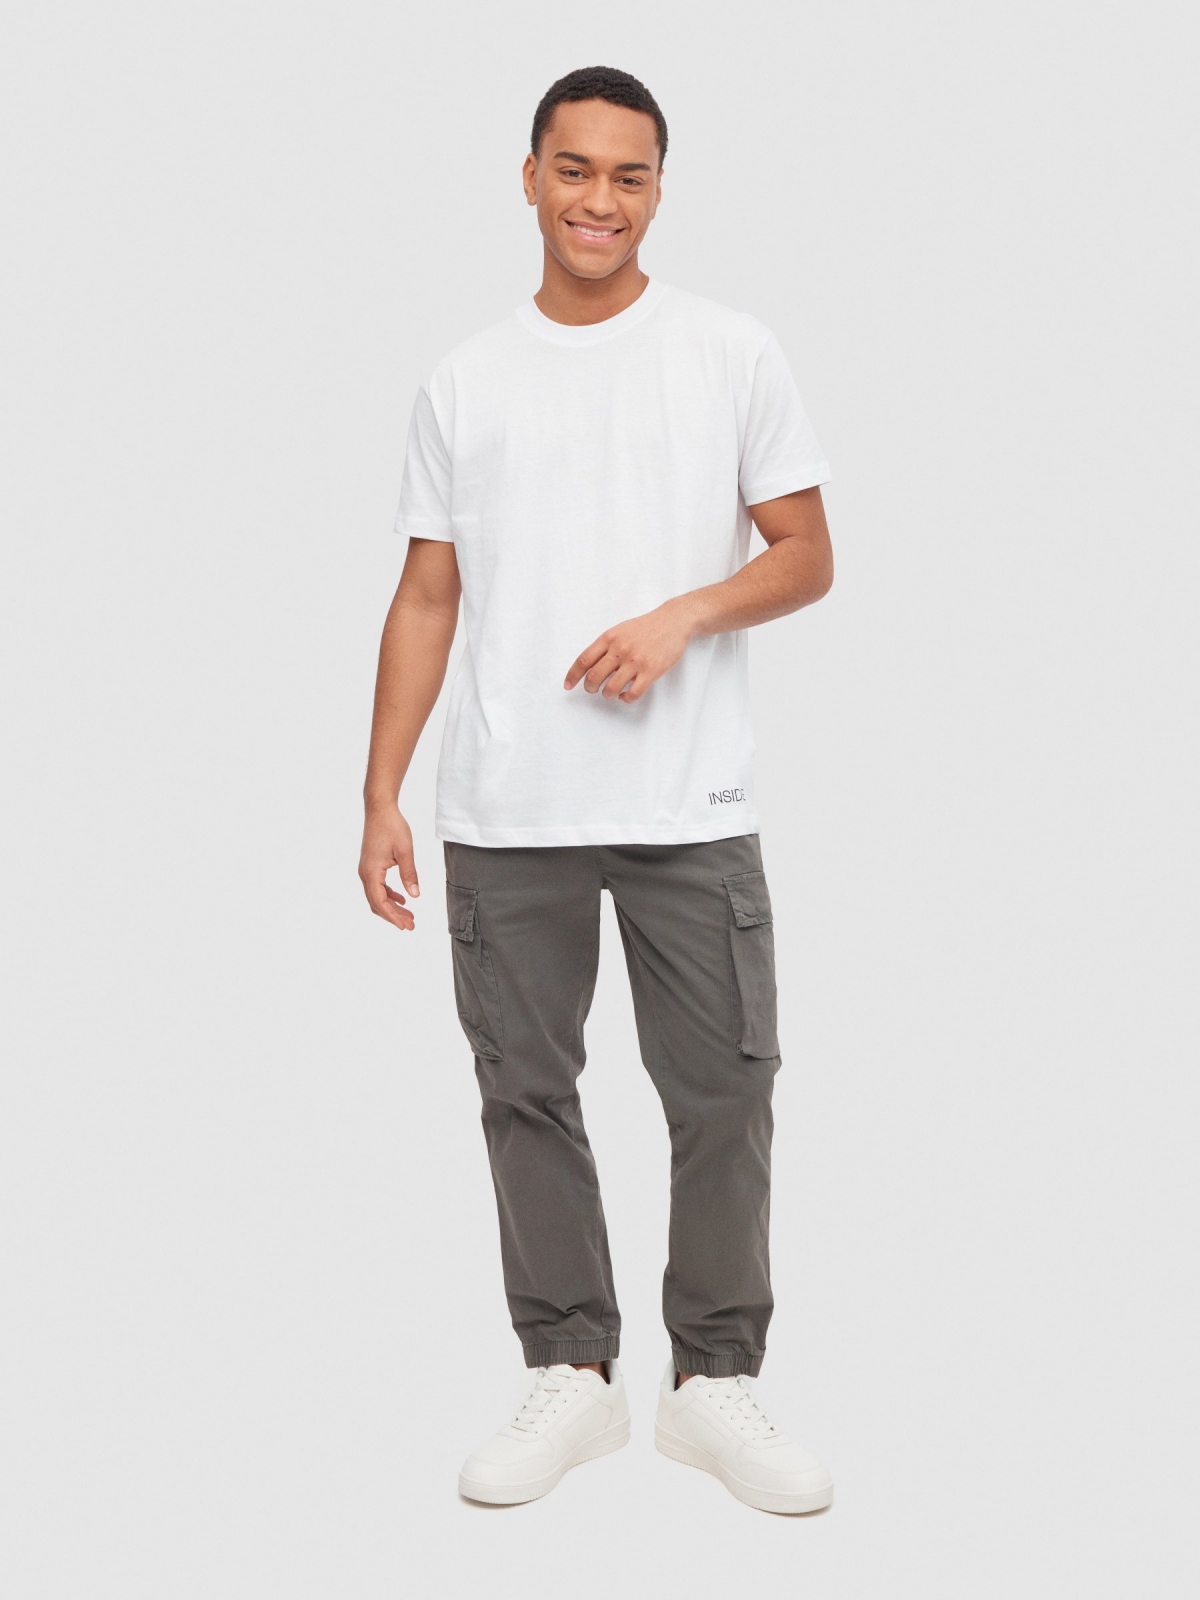 T-shirt básica de manga curta branco vista geral frontal